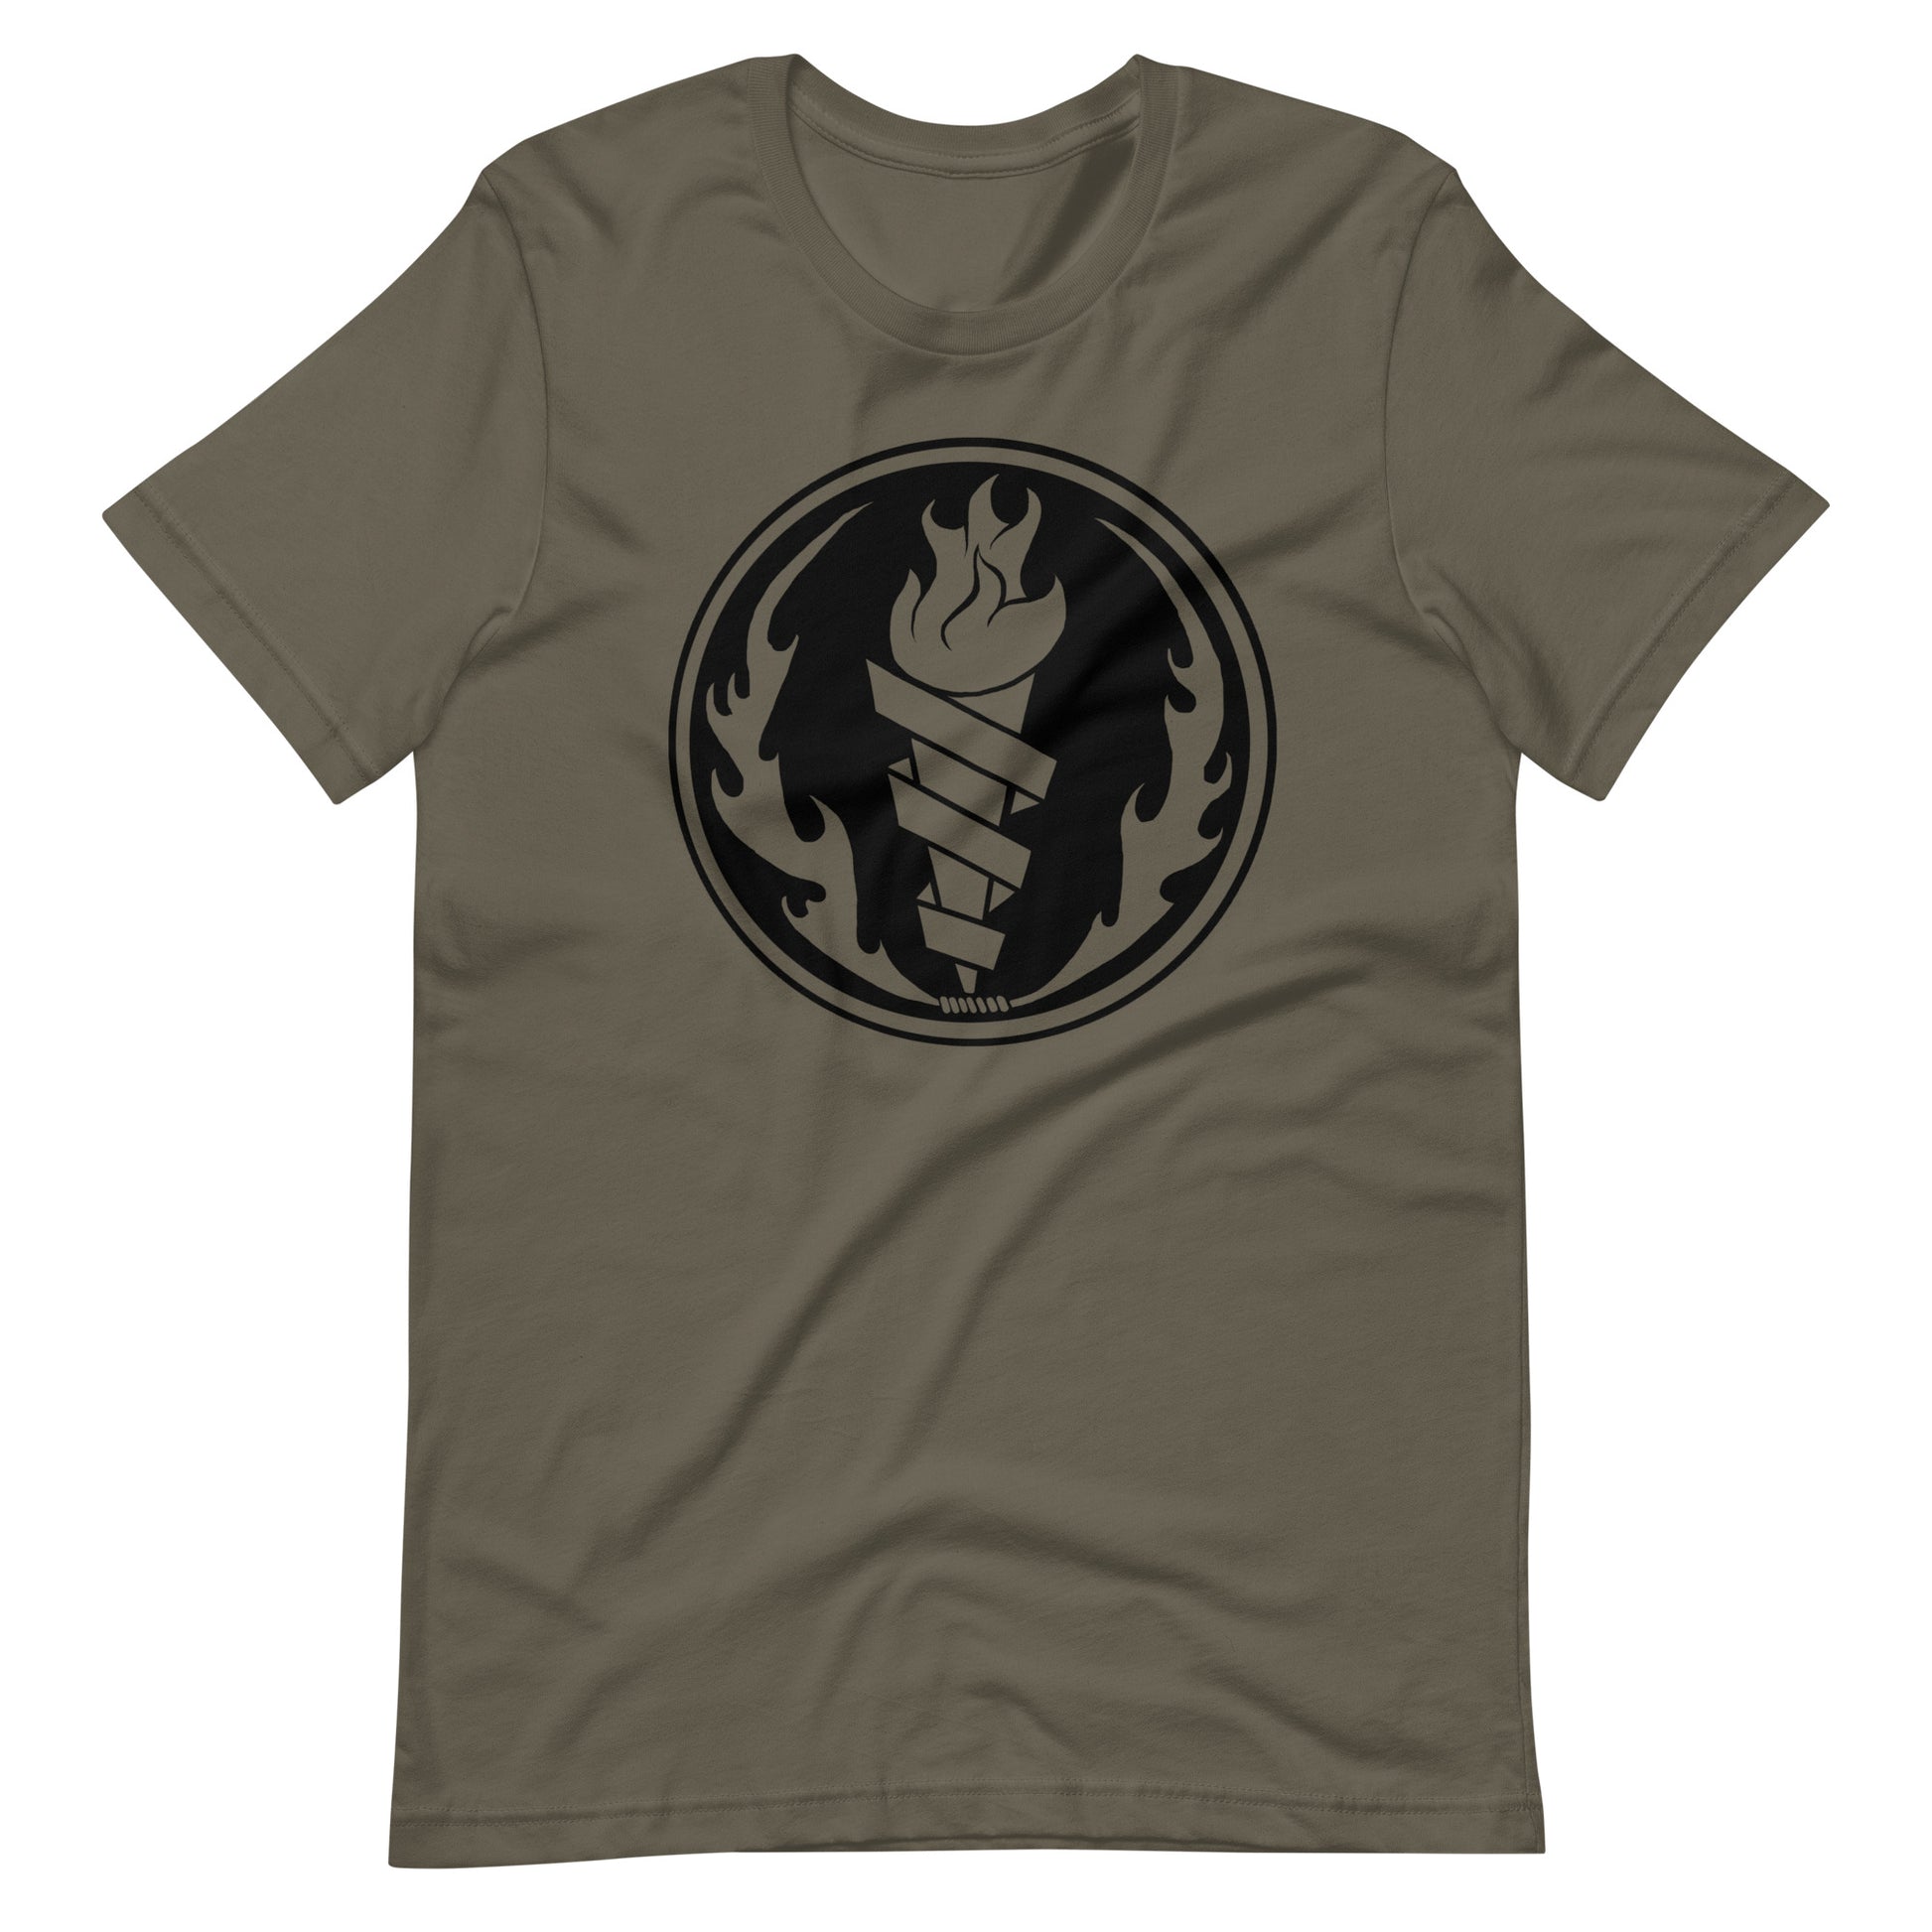 Fire Fire Black - Men's t-shirt - Army Front